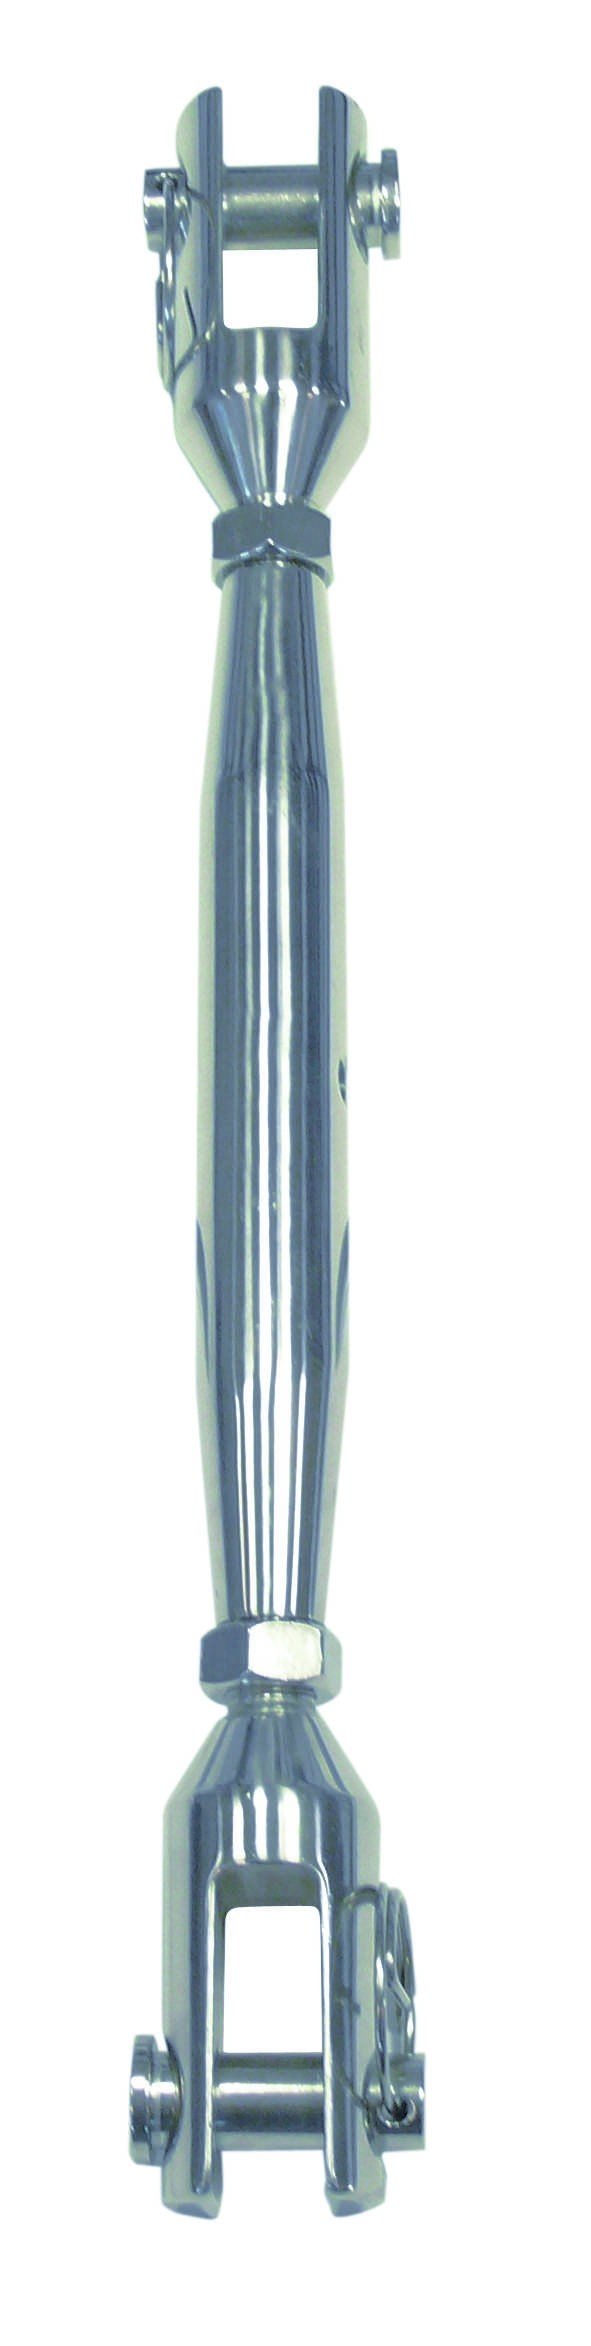 Wantspanner gaffel-gaffel M10 HQ dichte uitvoering RVS A4 1 stuks